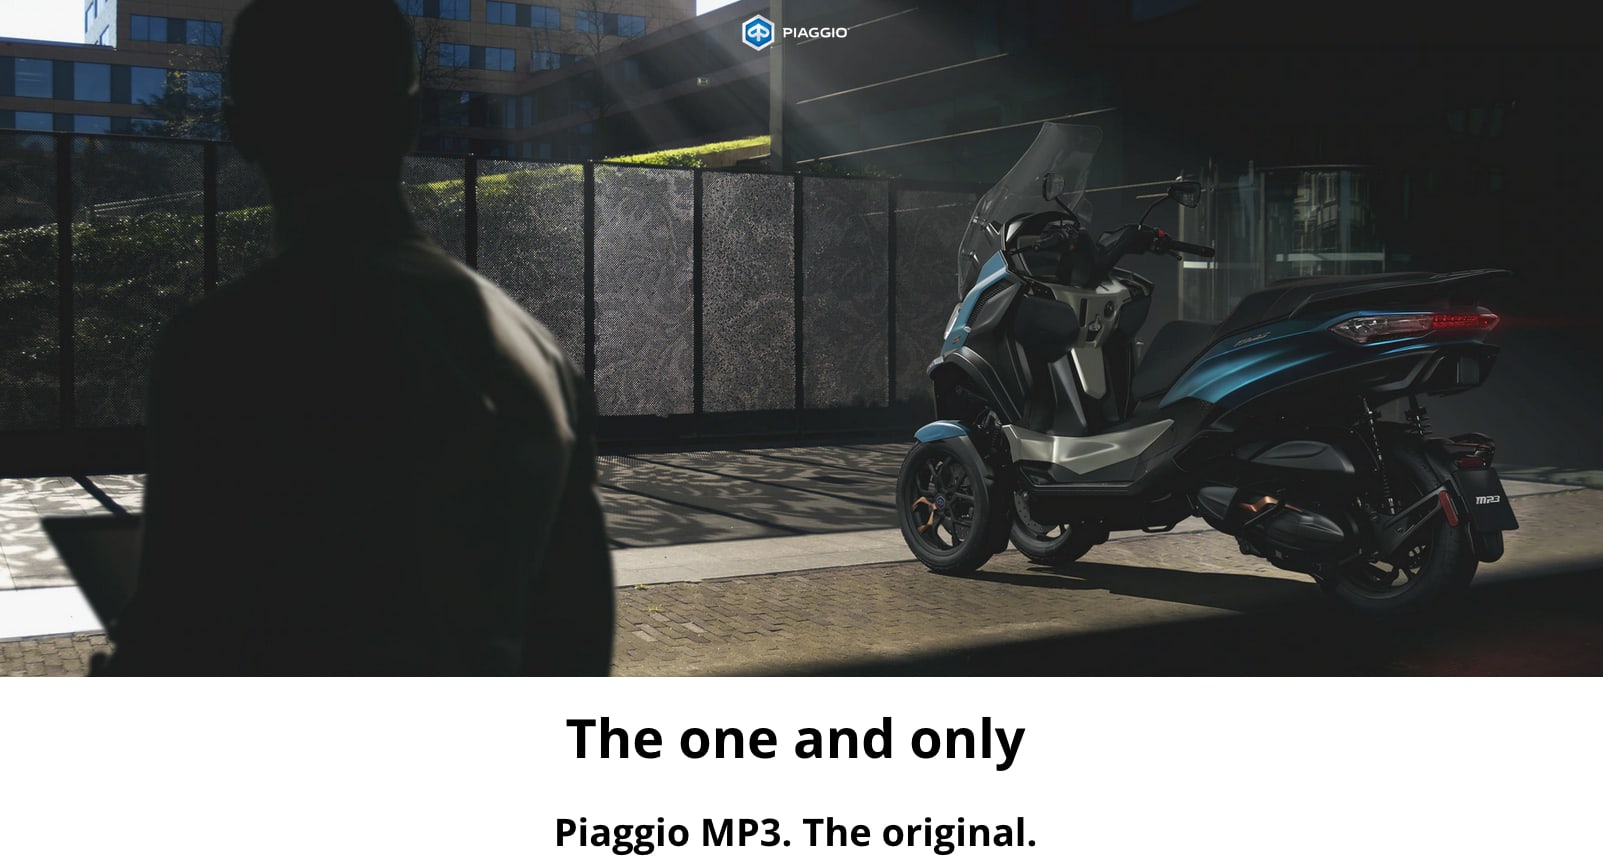 Piaggio endows new MP3 tilting 3-wheeler with first-in-class radar